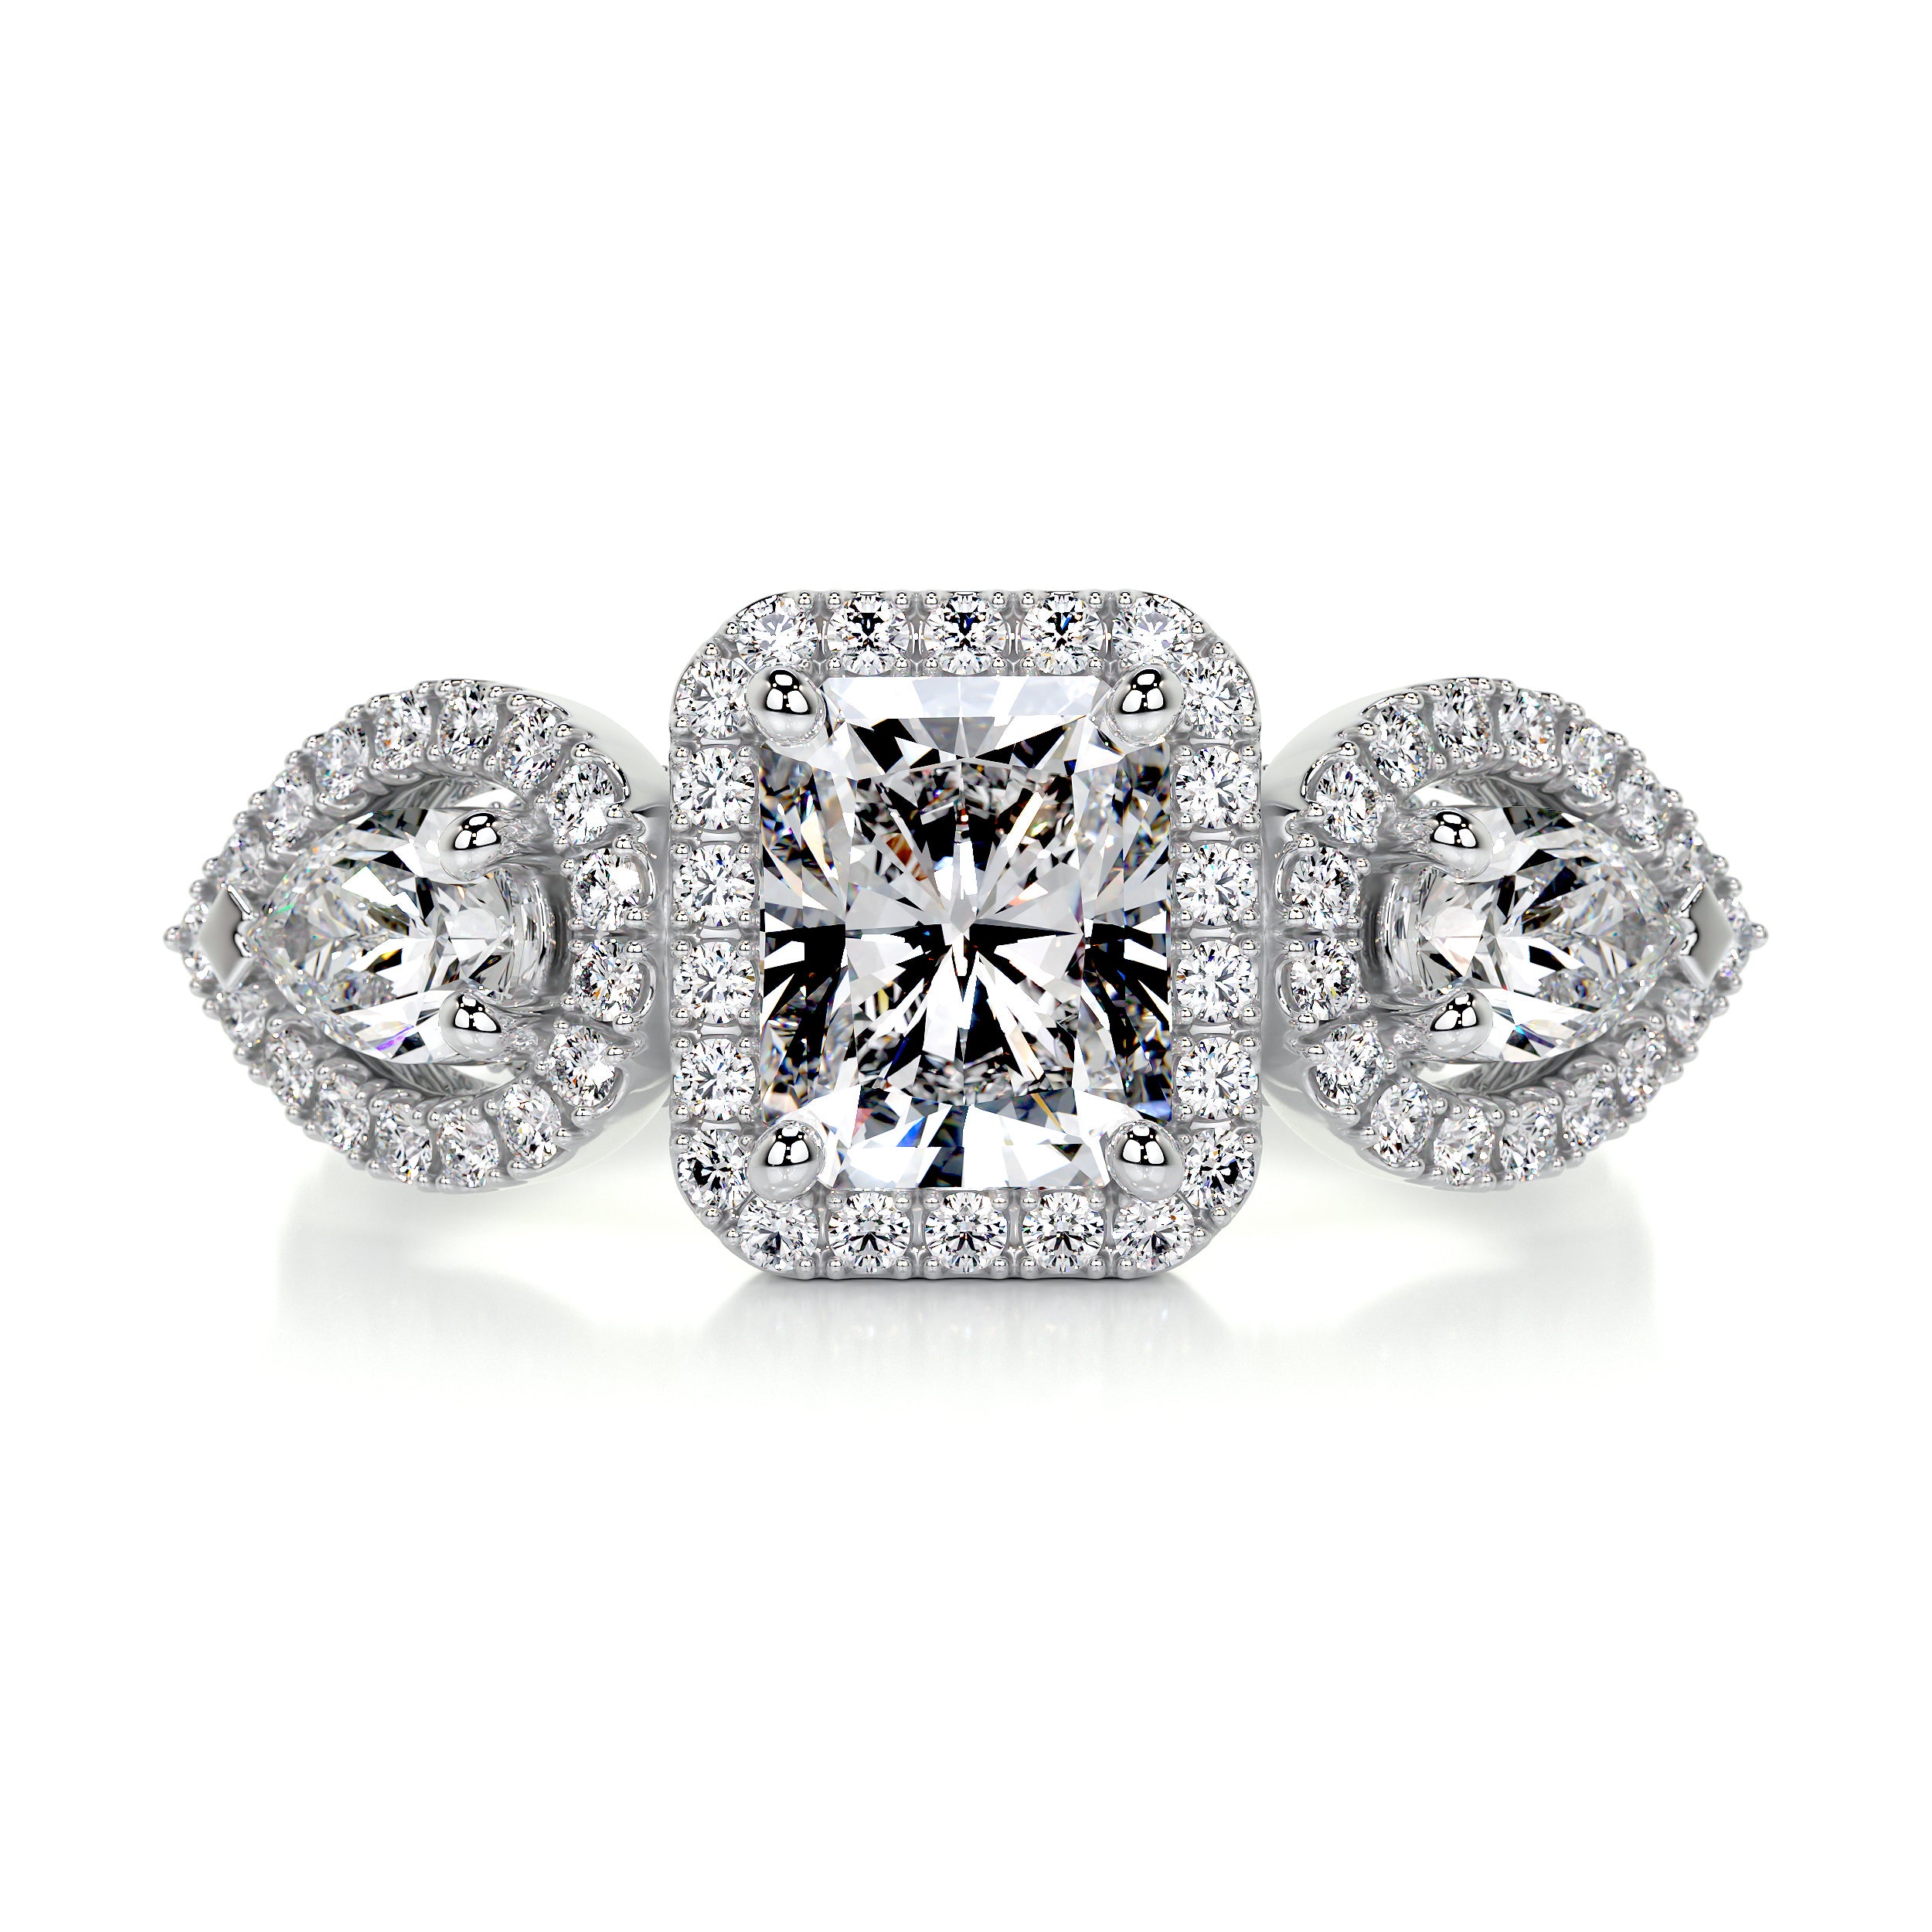 Violet Diamond Engagement Ring   (2.15 Carat) - 14K White Gold